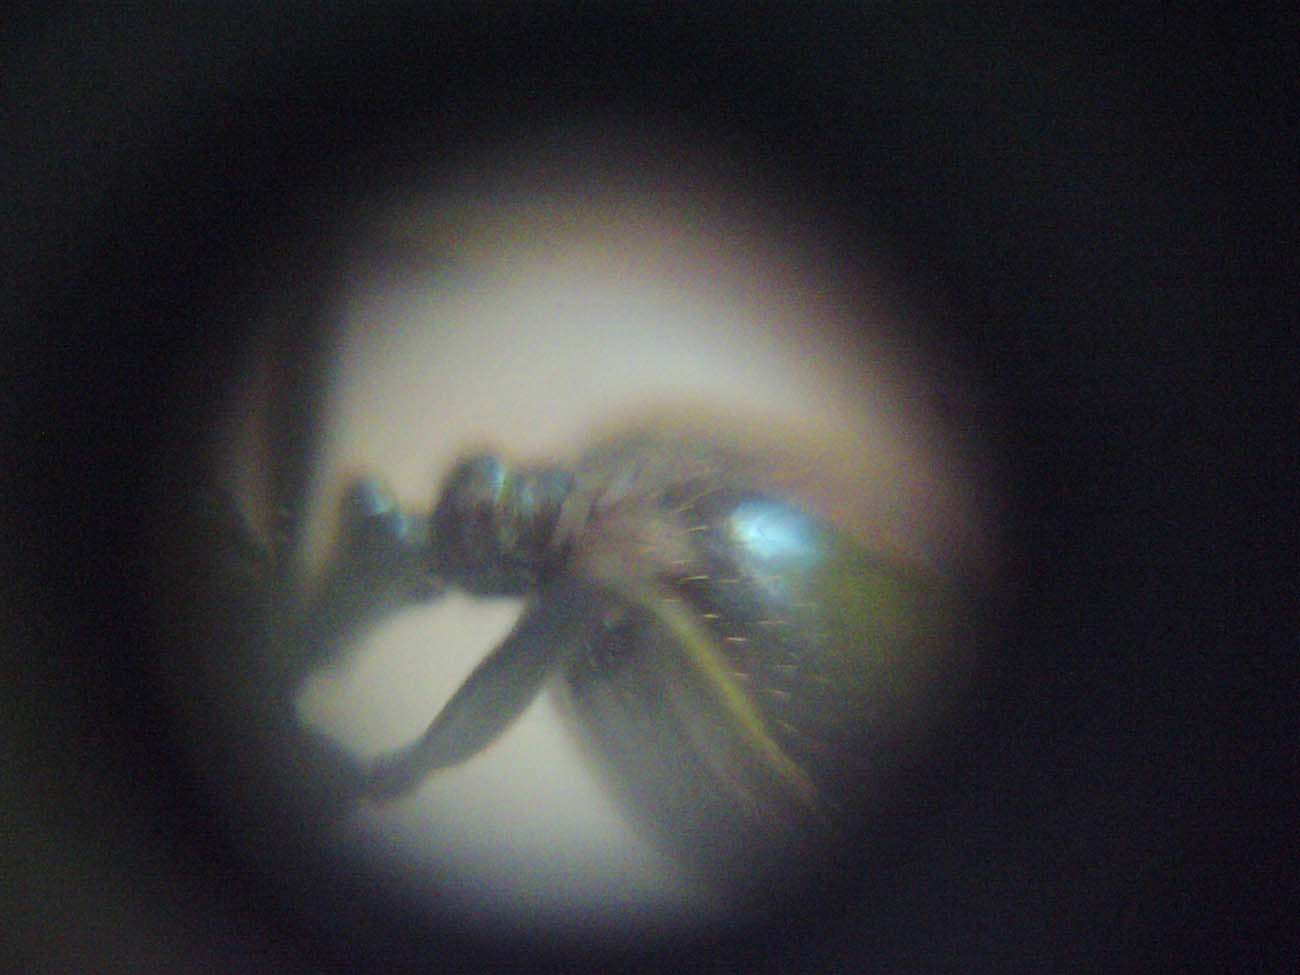 R. messor barbarus ocular telescopio 3